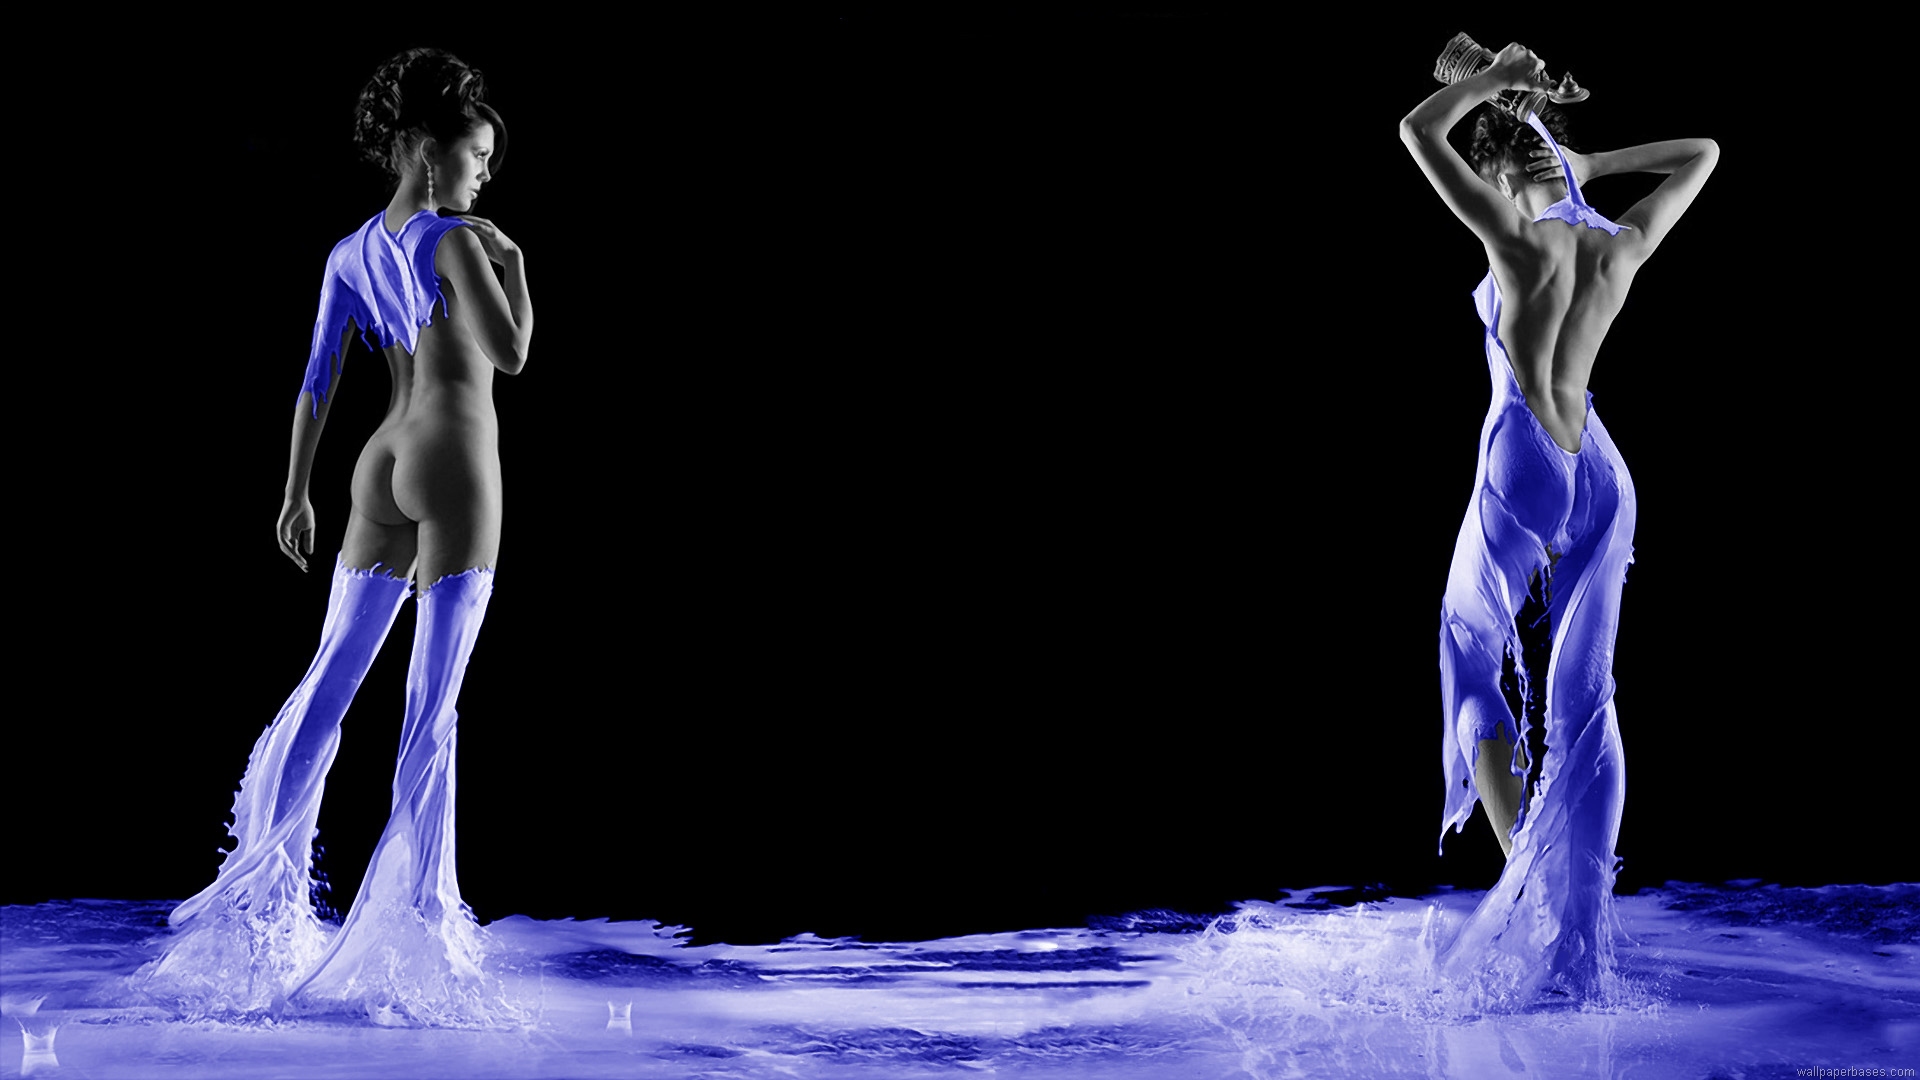 1080 x 1920 pixels hd wallpapers,water,dancer,modern dance,performance,performing arts